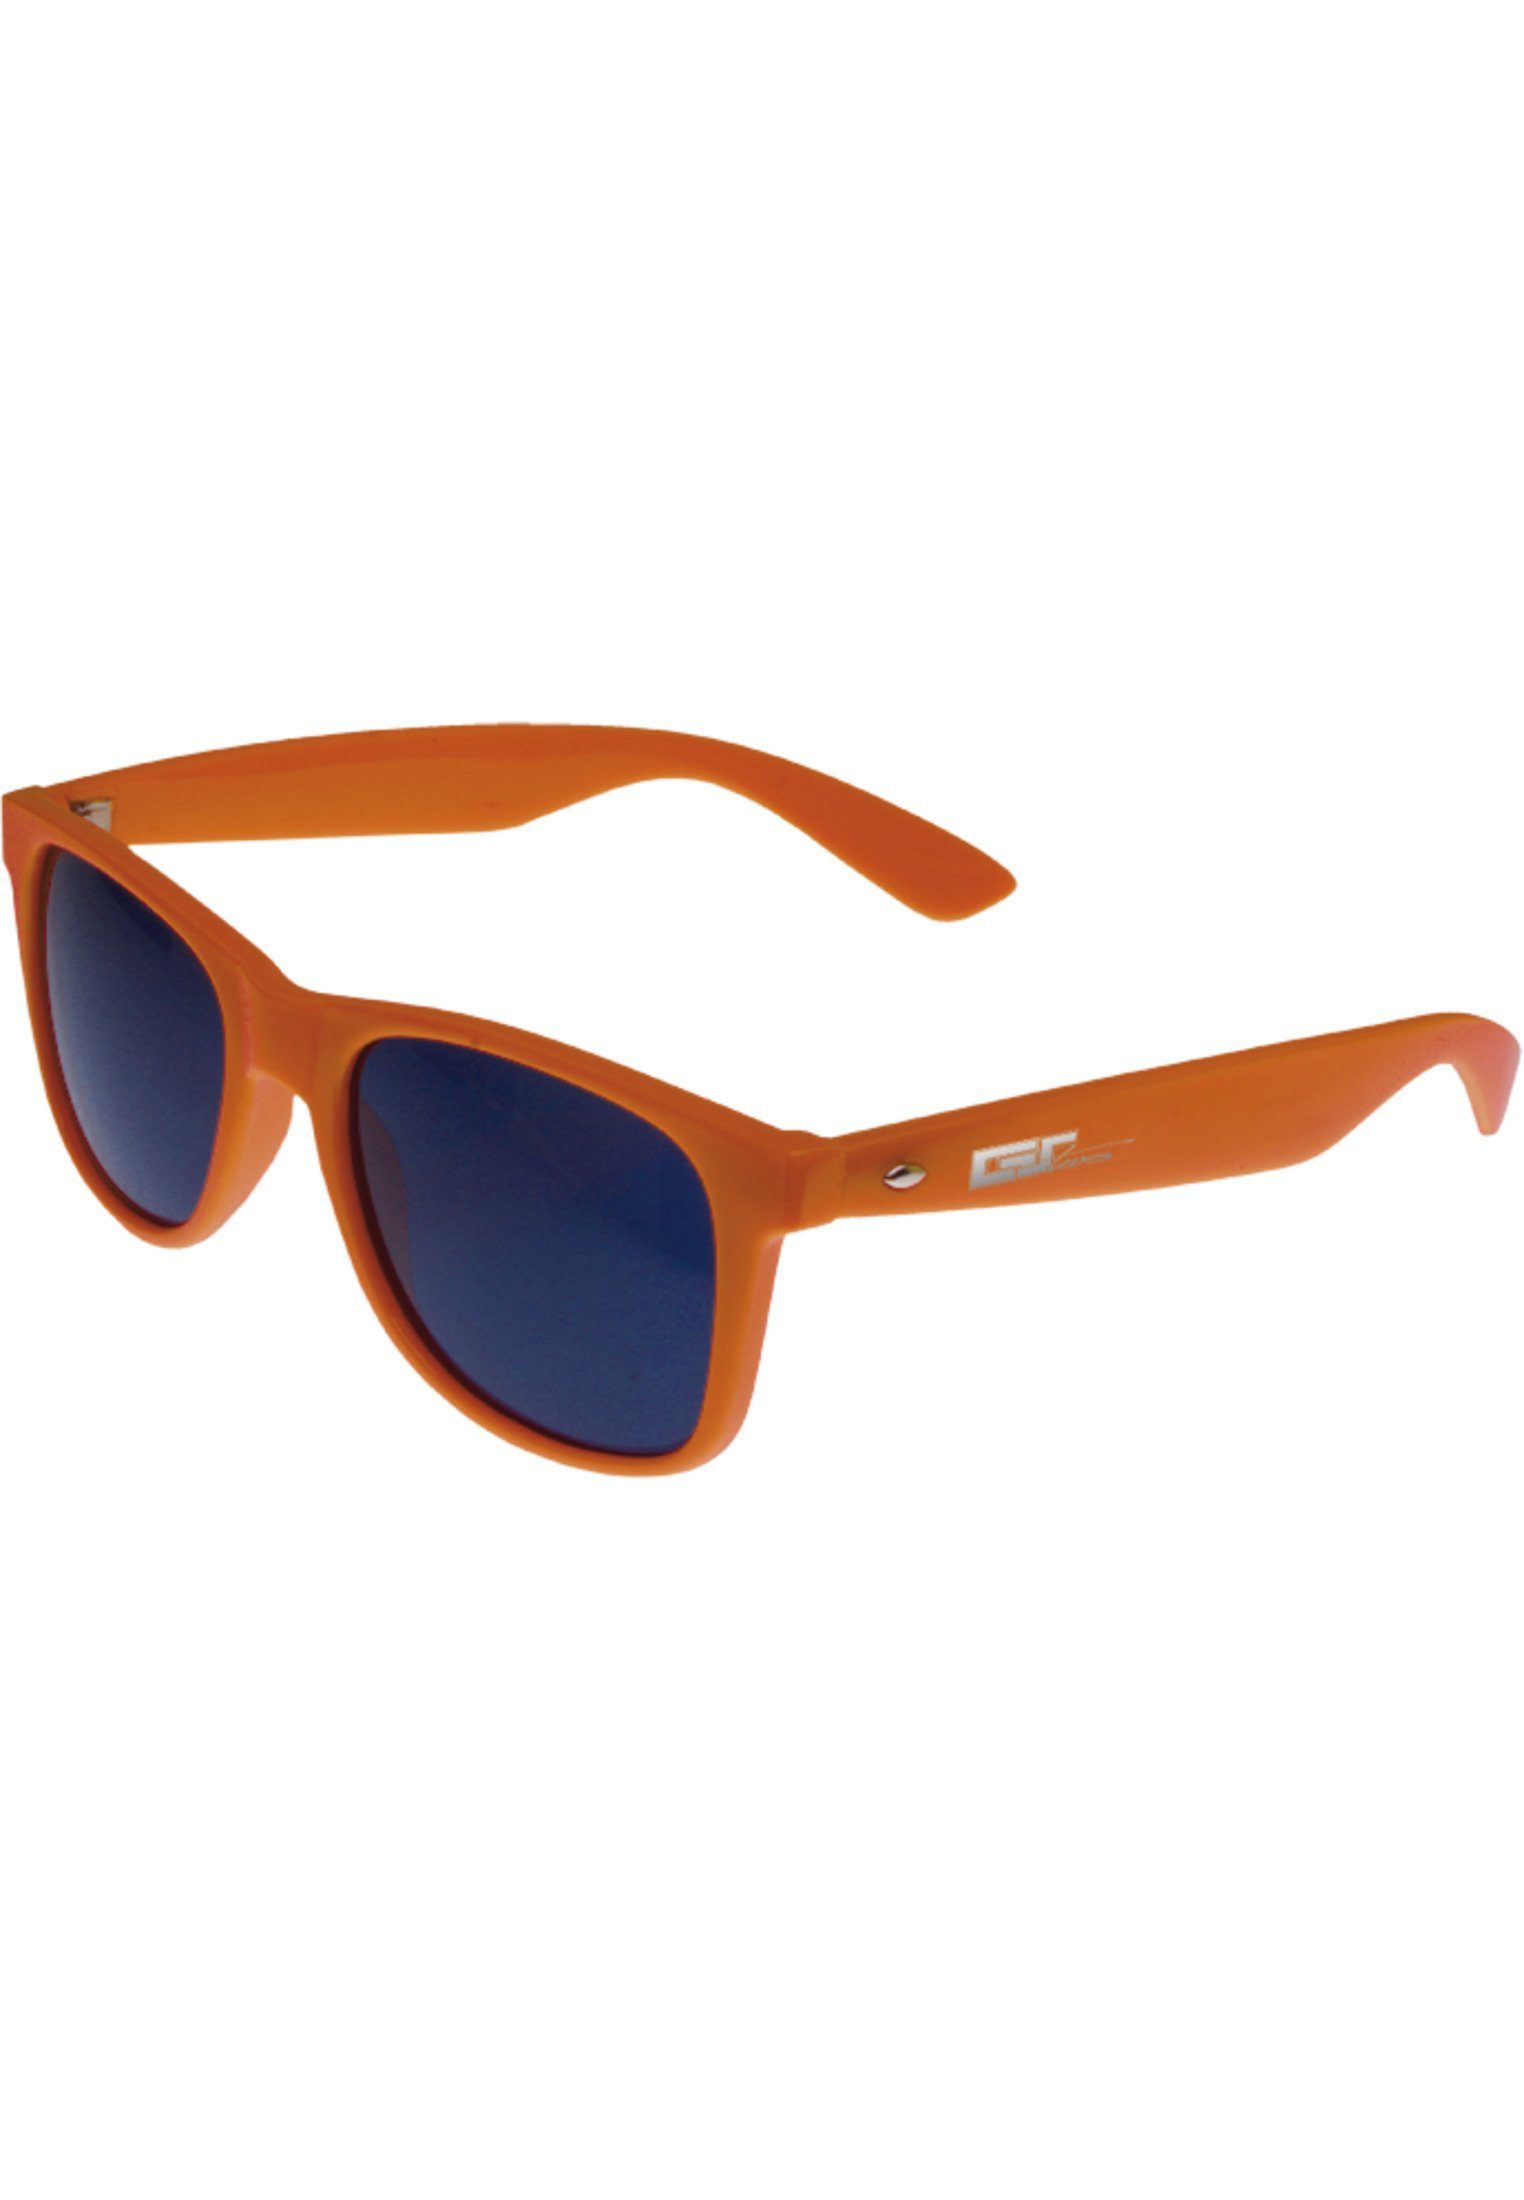 MSTRDS Sonnenbrille orange Accessoires Groove GStwo Shades